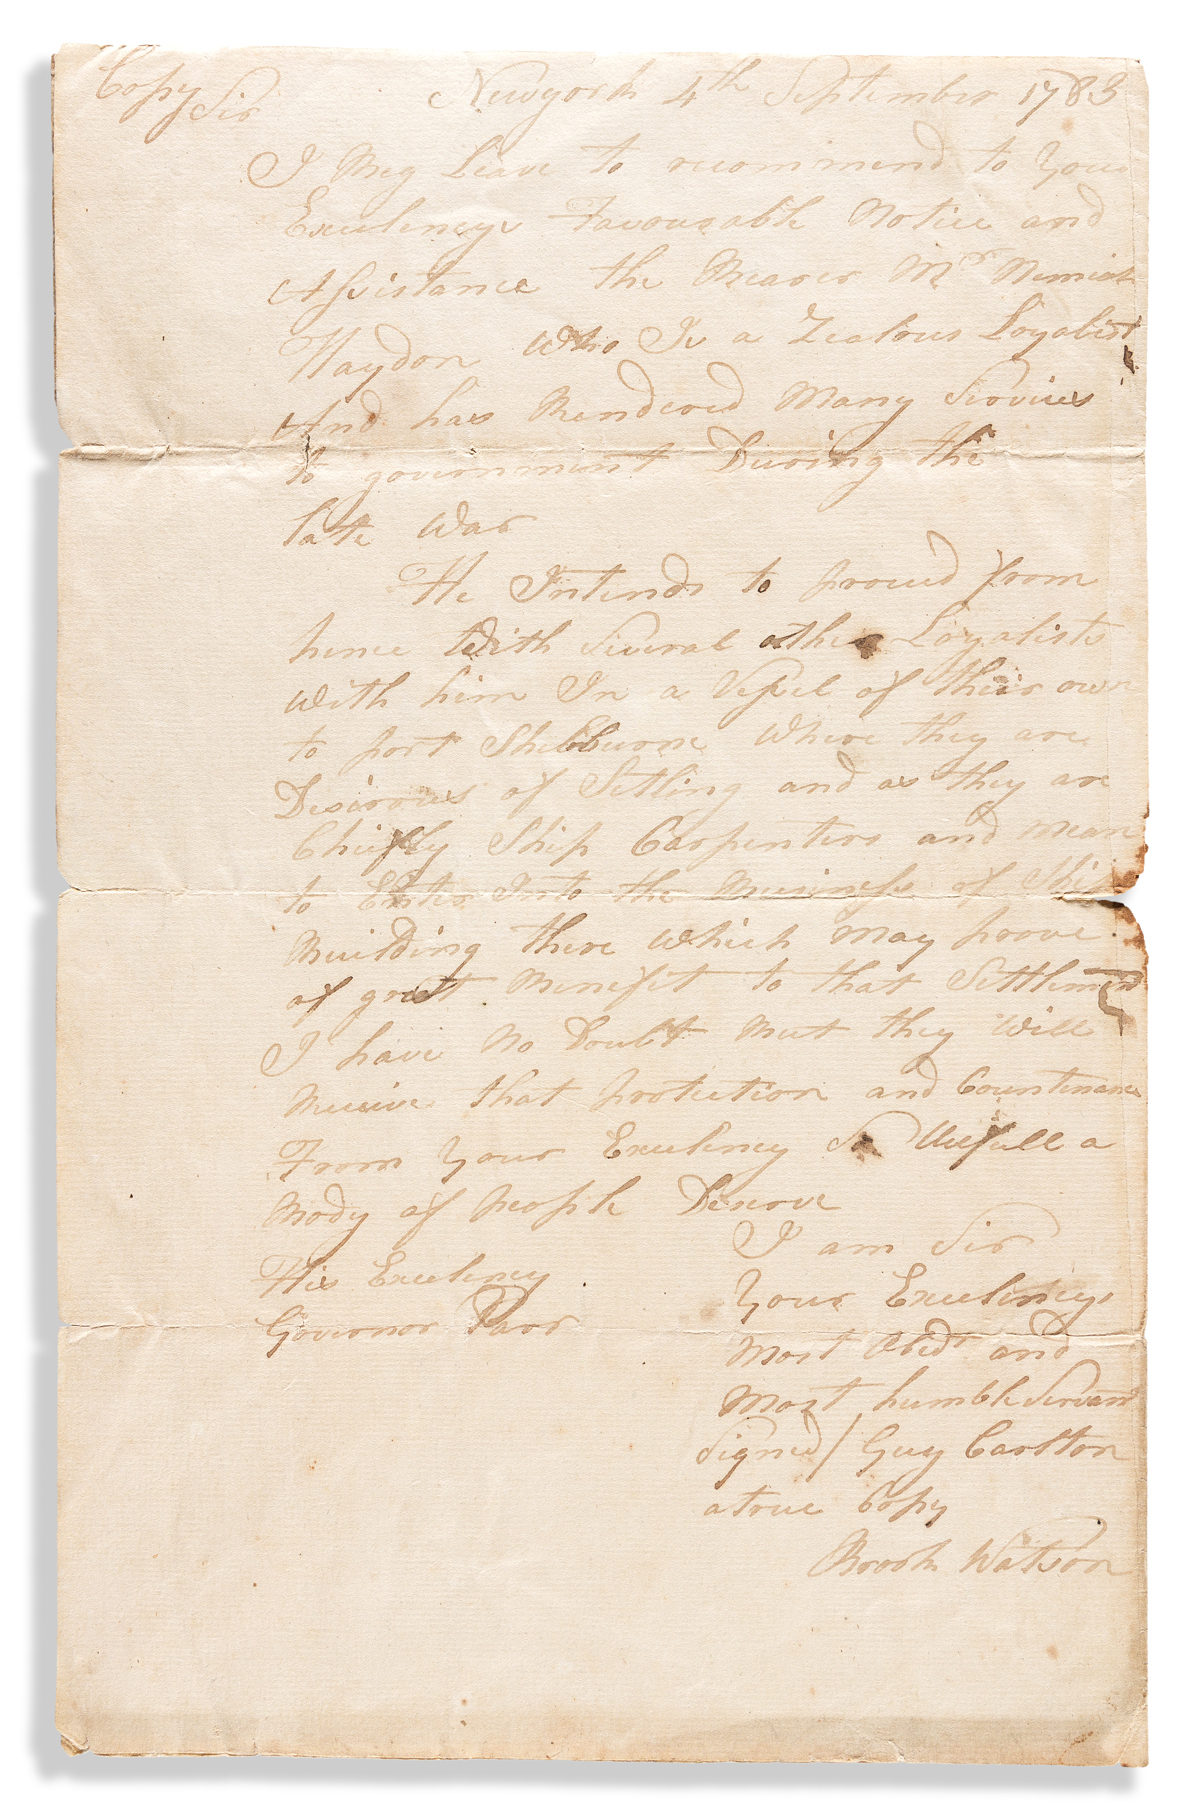 (AMERICAN REVOLUTION--1783.) Sir Guy Carleton. Letter of recommendation for a New York Loyalist seeking refuge in Nova Scotia.